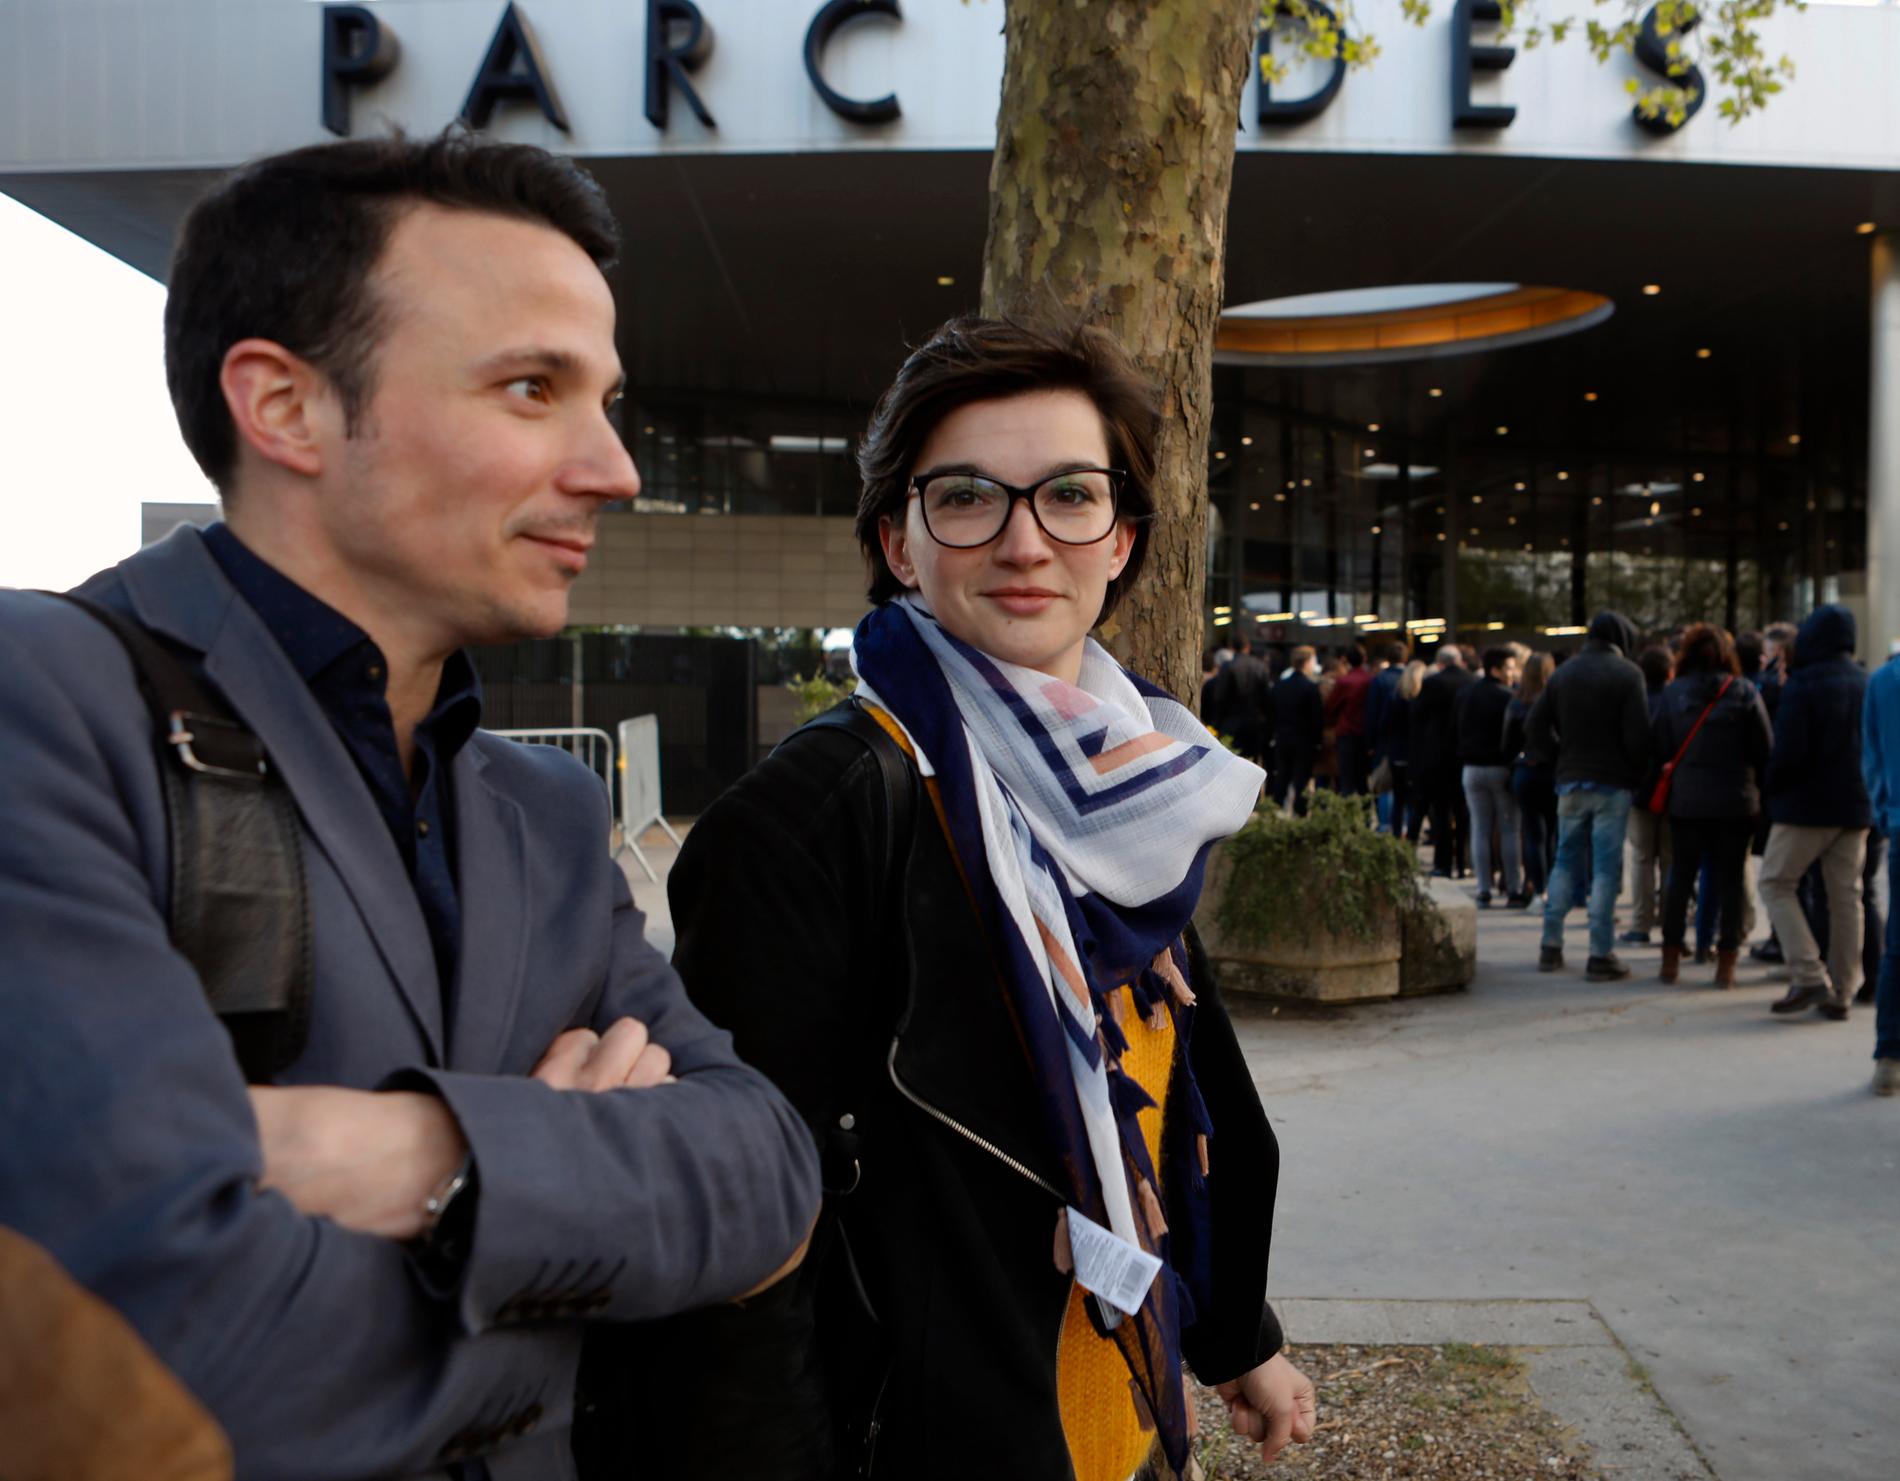 lexis Cartaut, 33 och Laurent Cote, 28, tvekar mellan Mélenchon och Macron